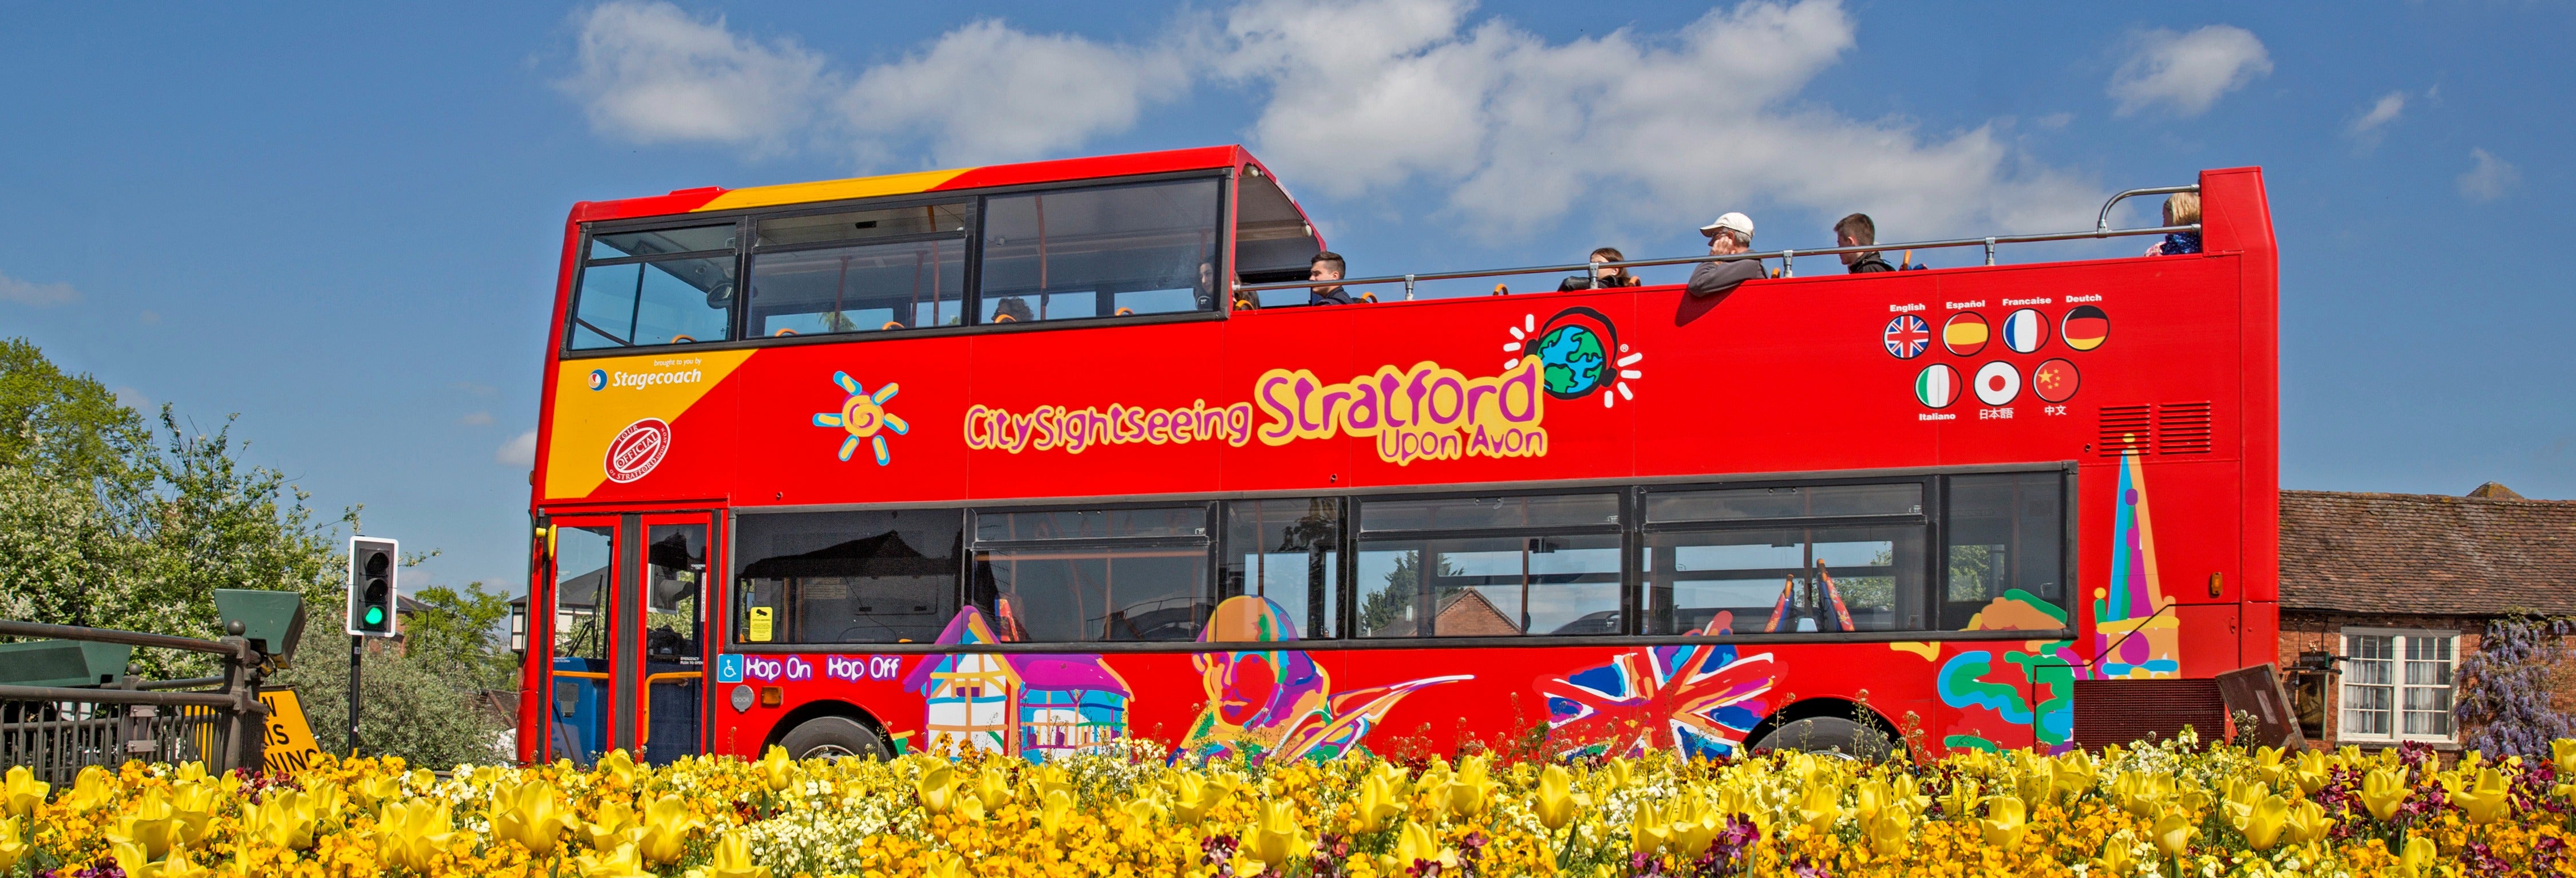 City Sightseeing Stratford-upon-Avon Bus Tour